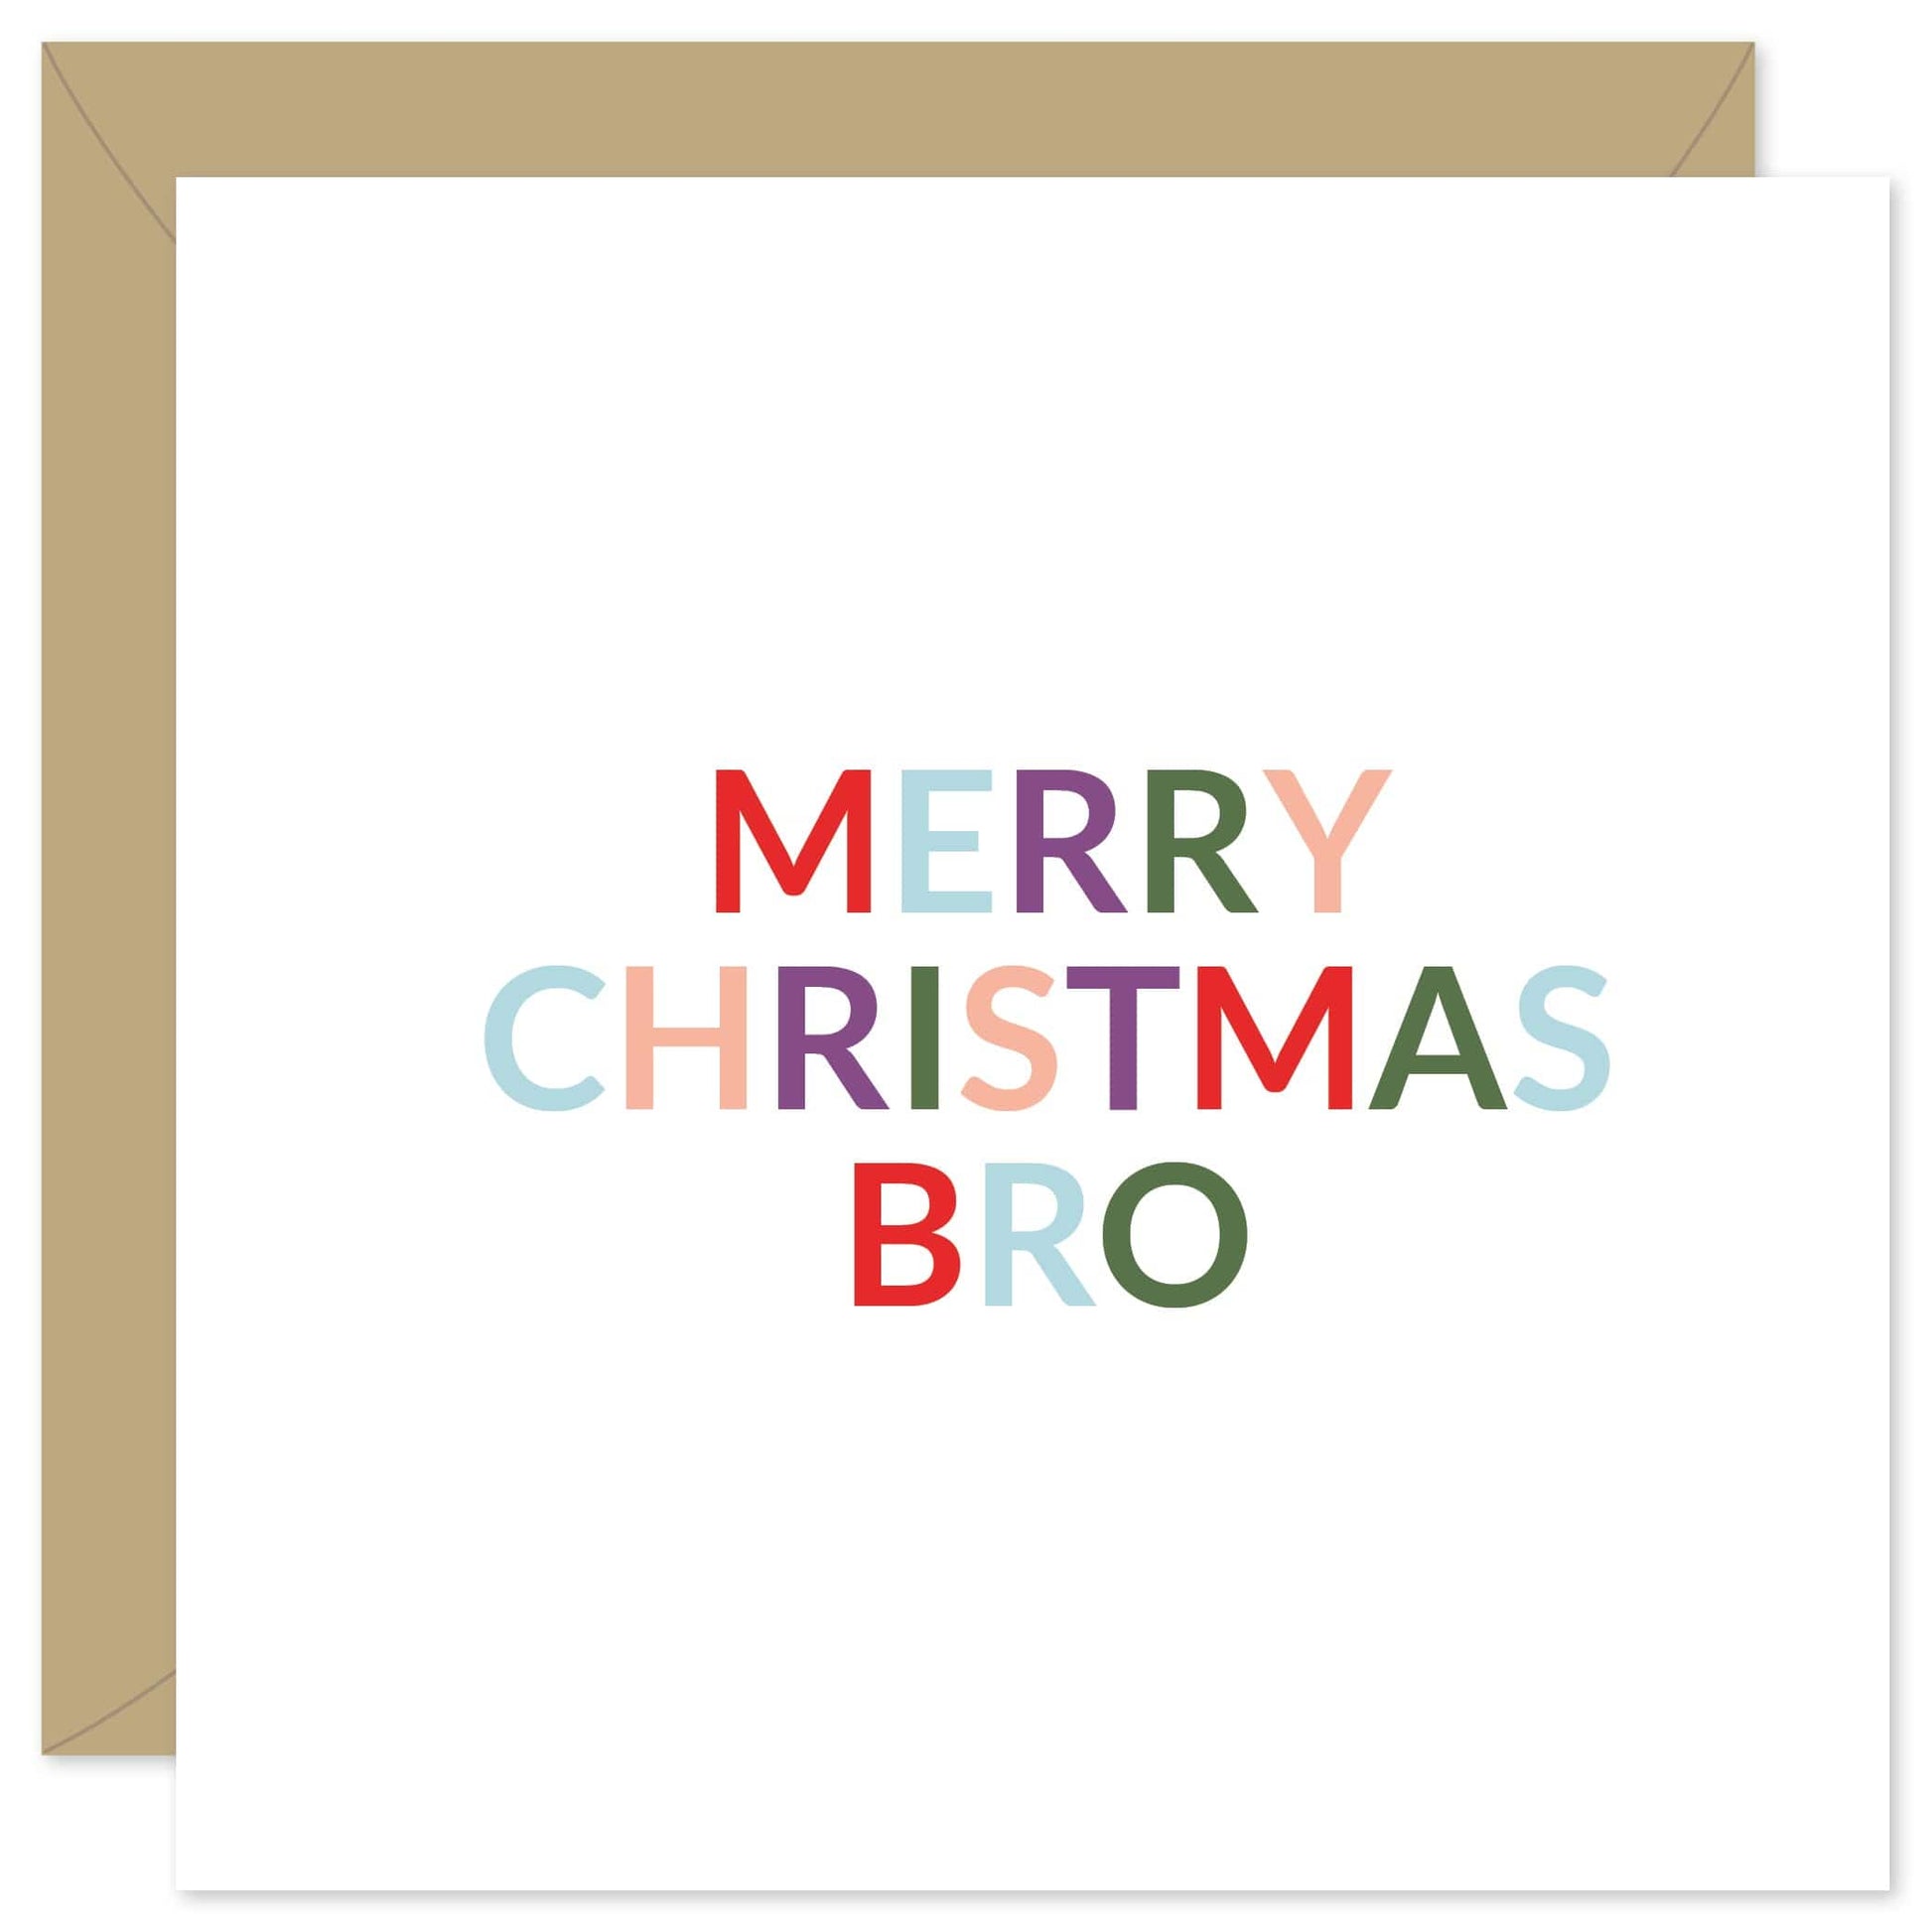 Merry Christmas bro Christmas card from Purple Tree Designs